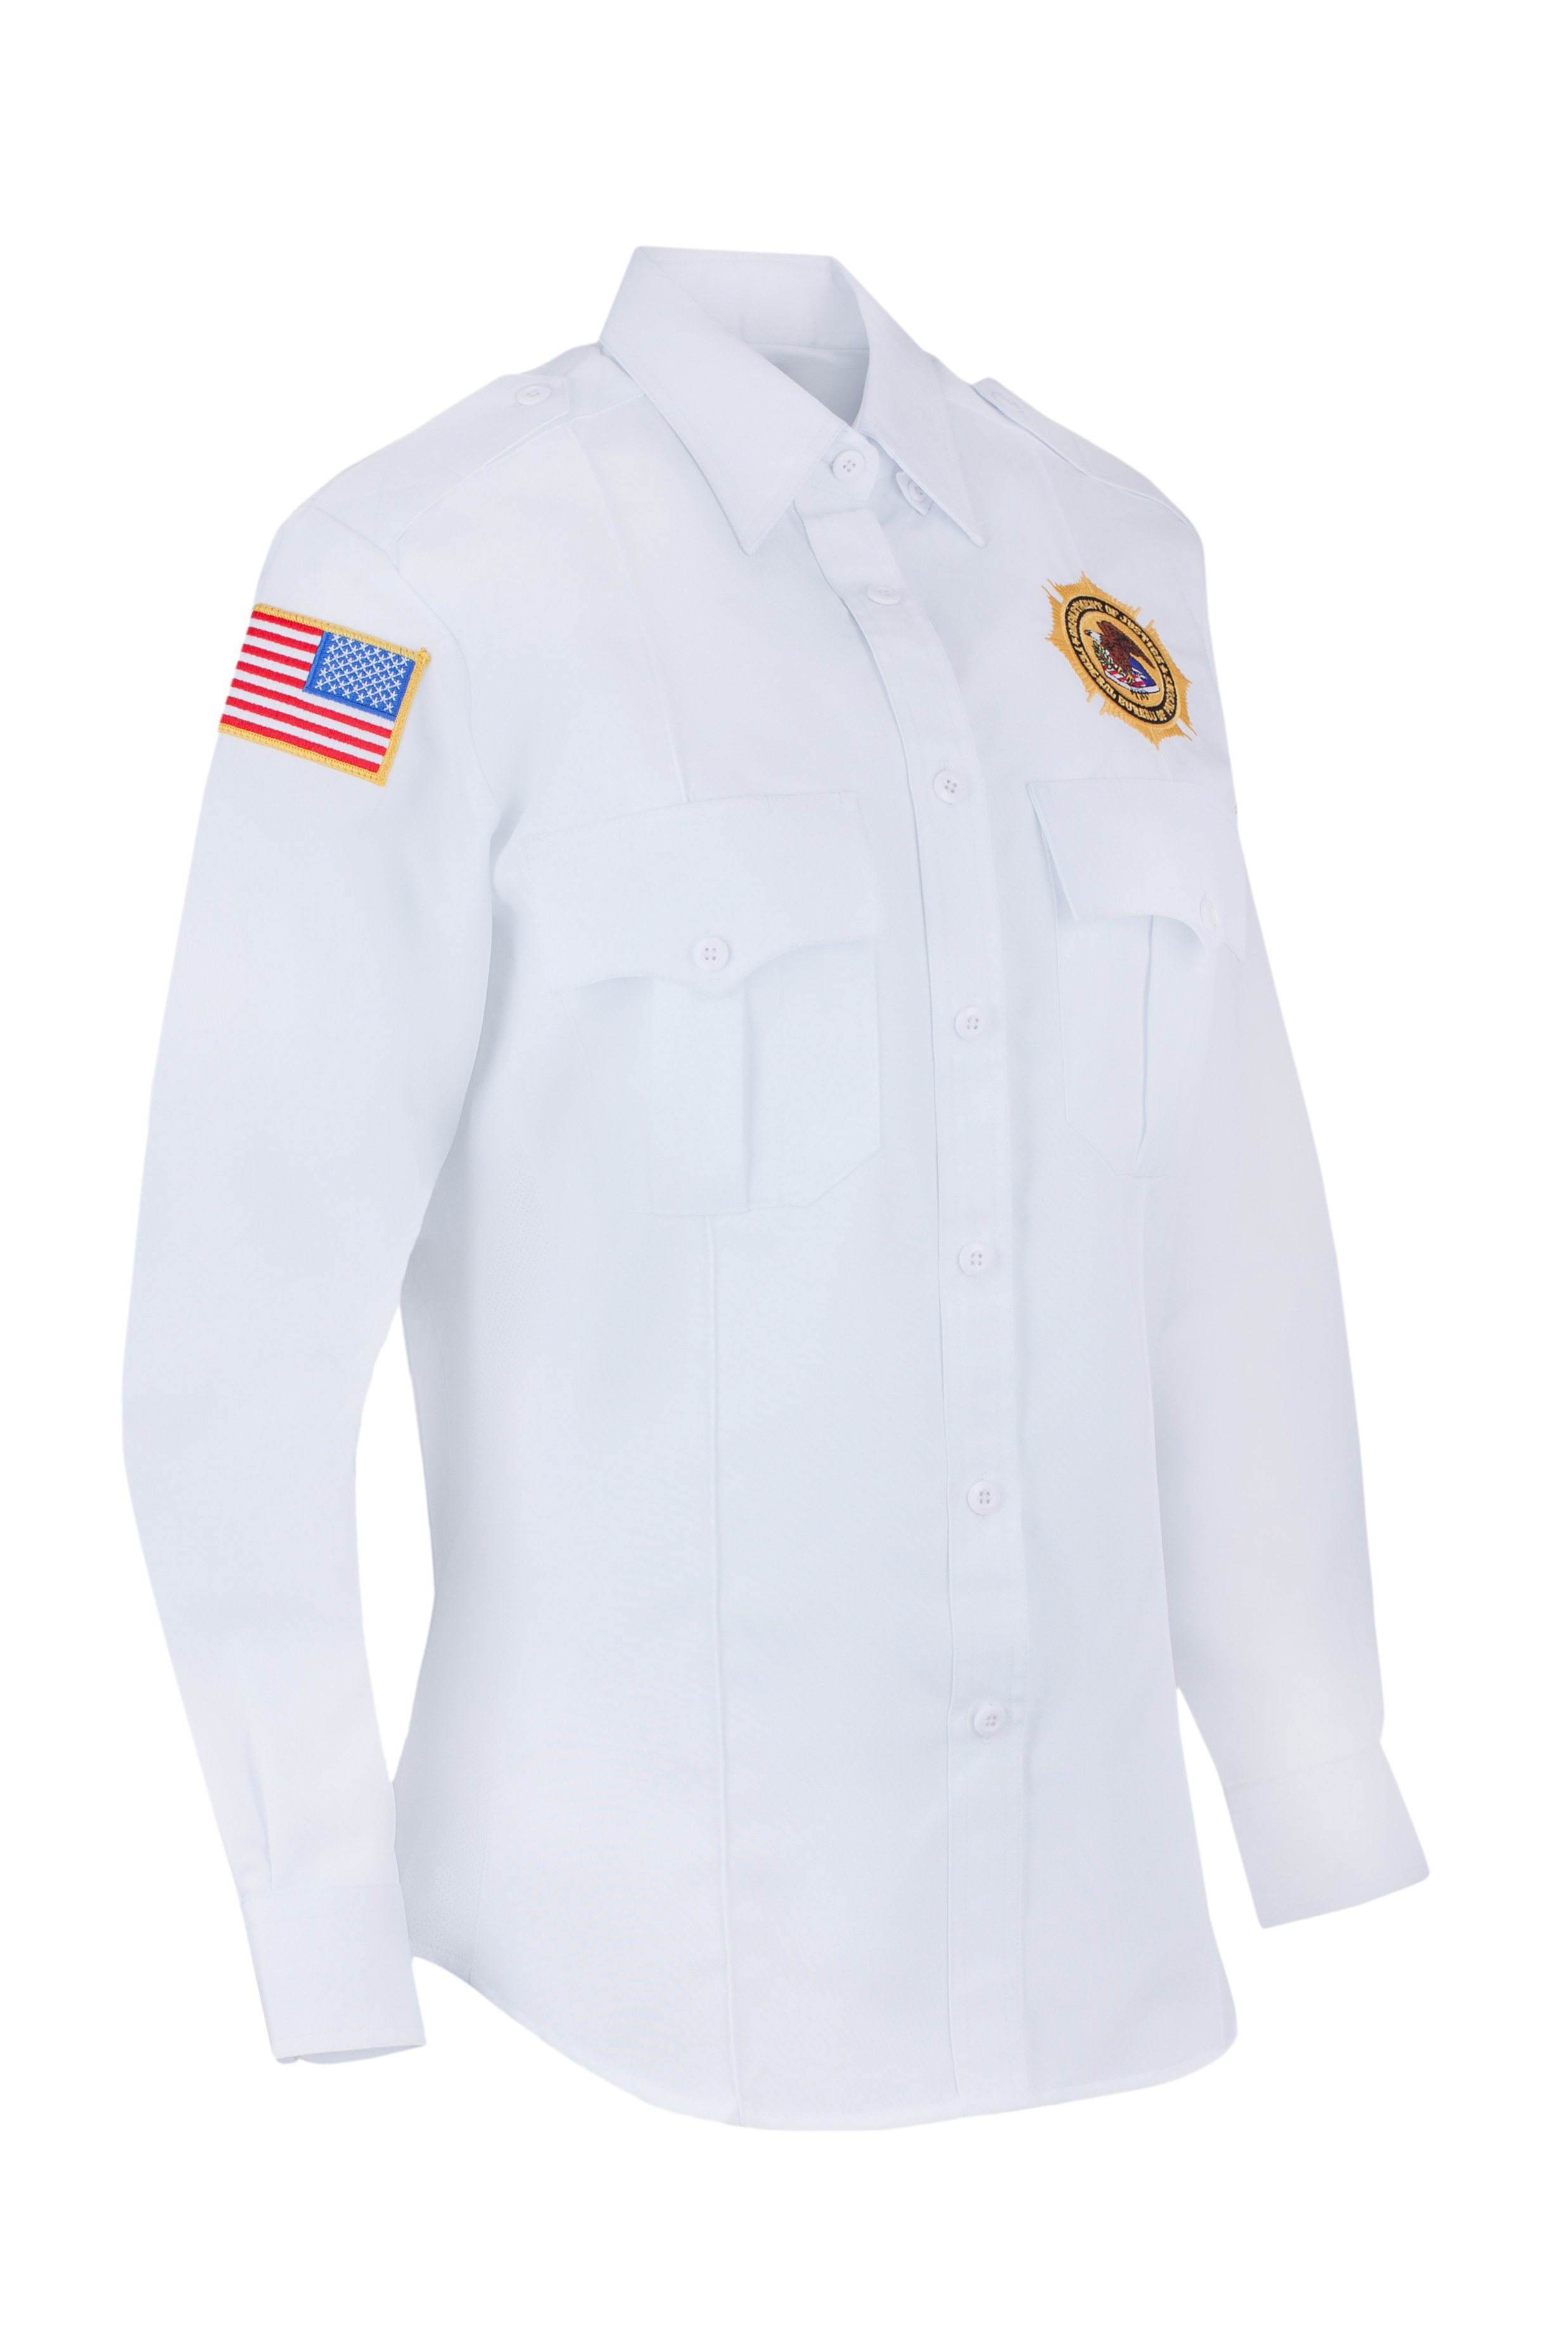 Buy Women White Solid Long Sleeves Formal Shirt Online - 749564